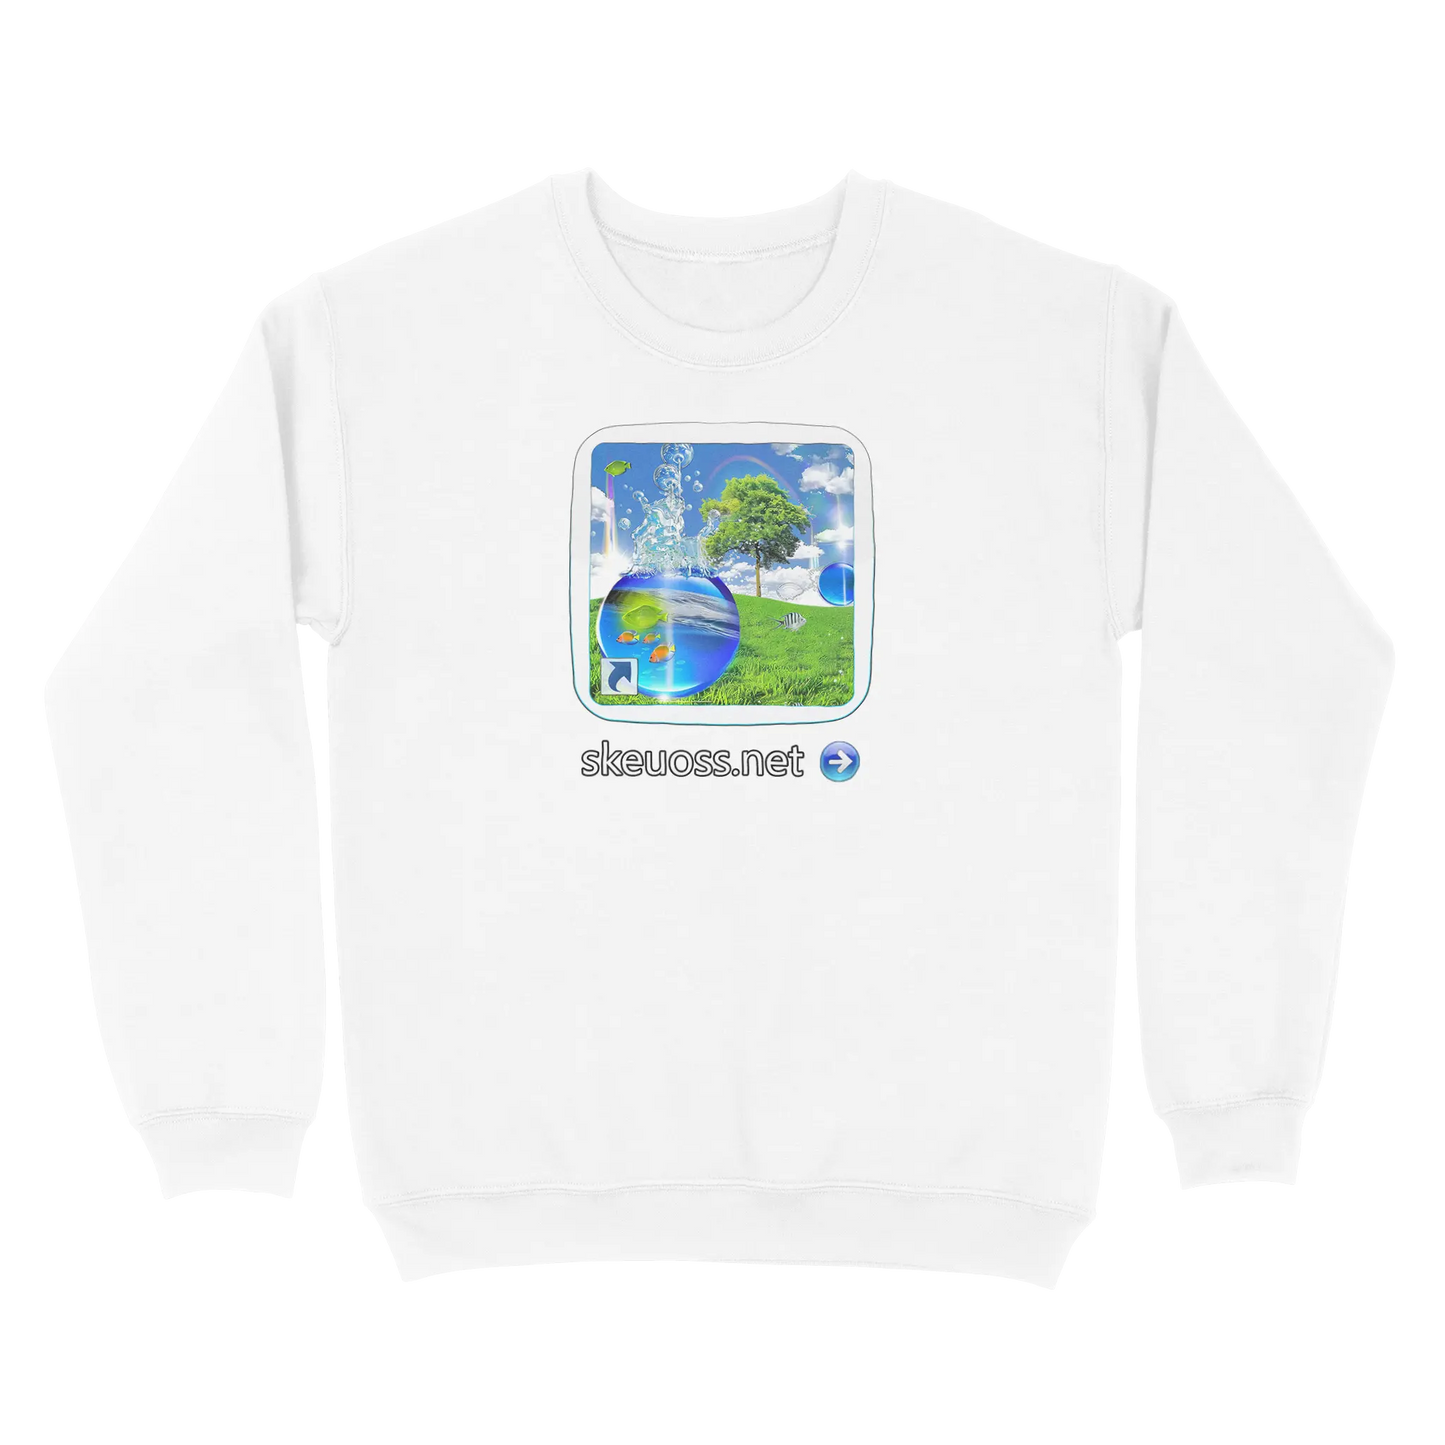 Frutiger Aero Sweatshirt - User Login Collection - User 401